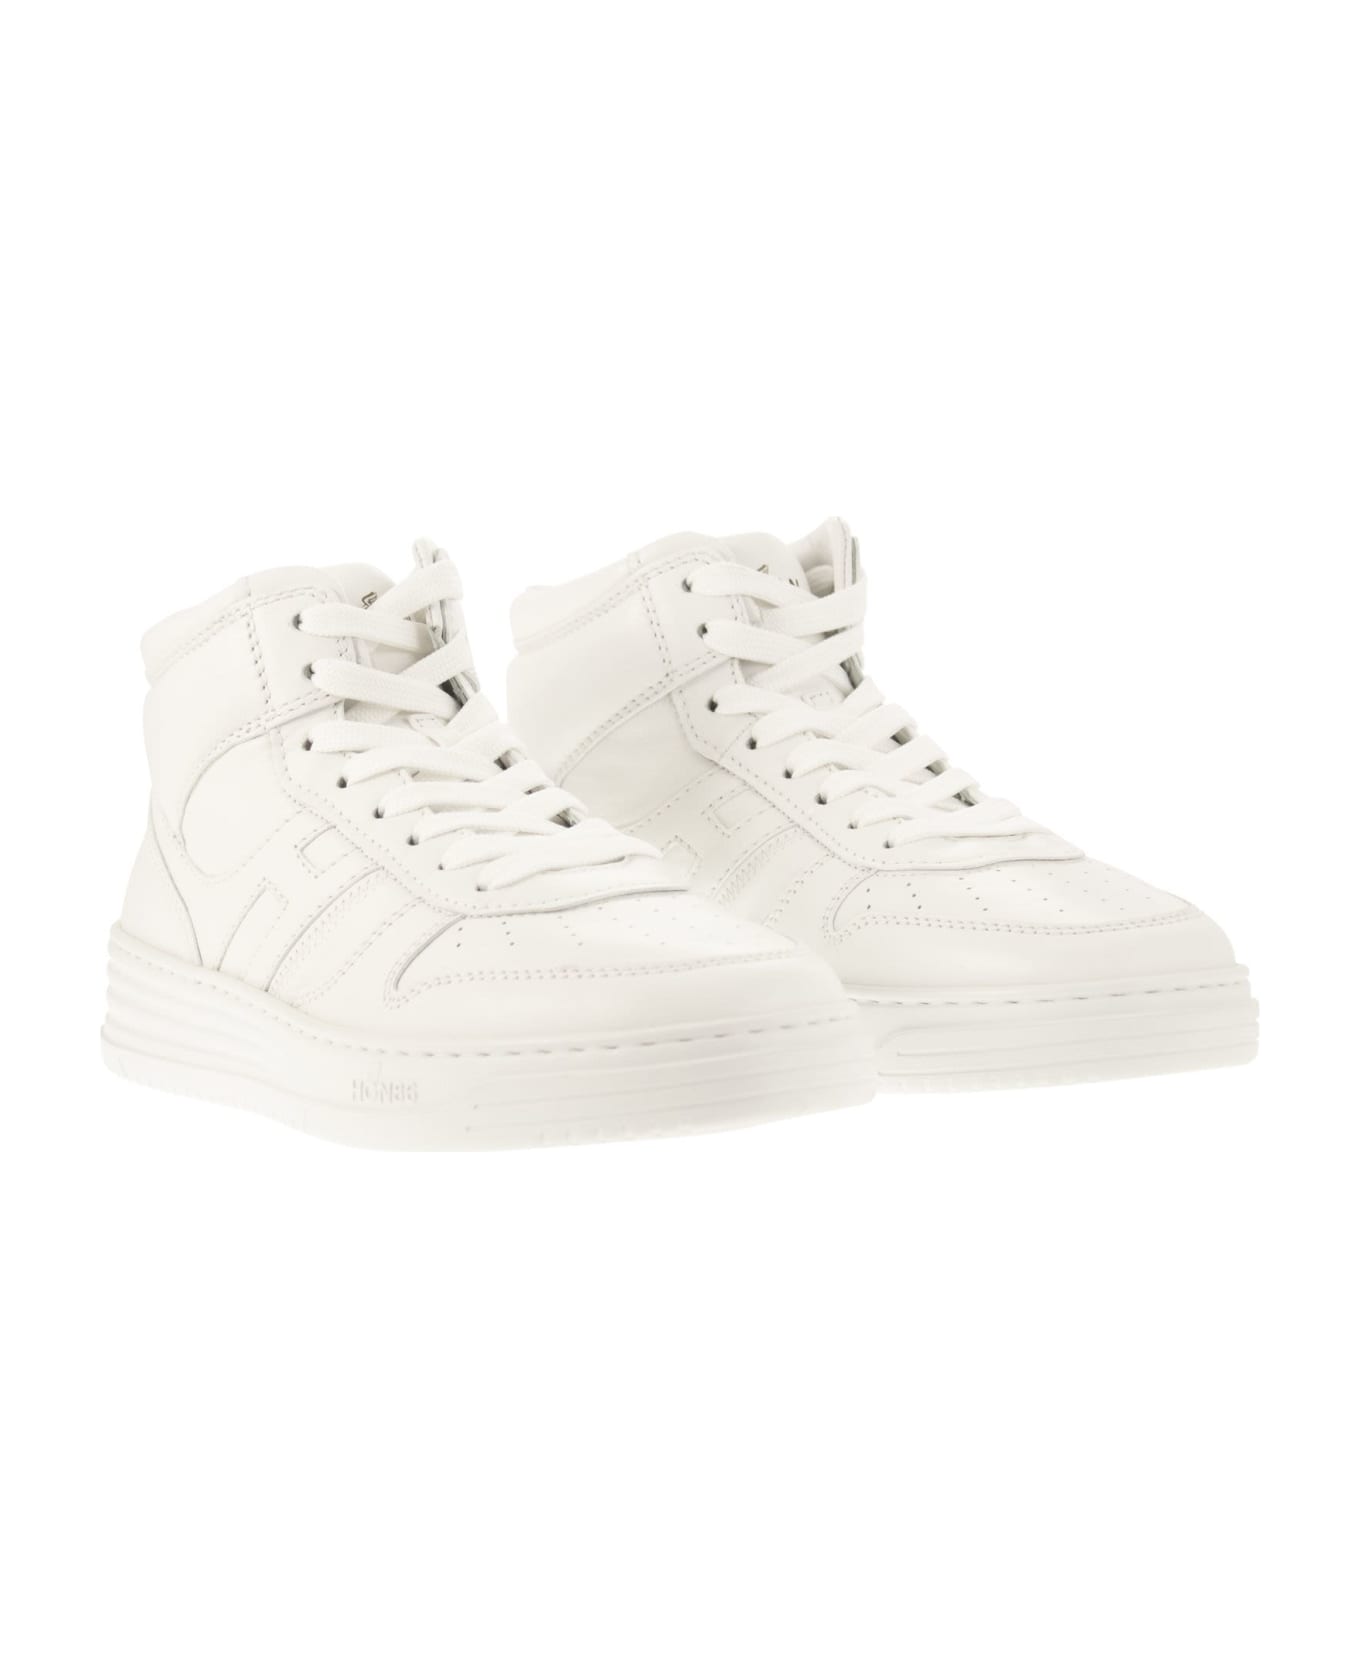 Hogan White Leather Sneakers - White スニーカー